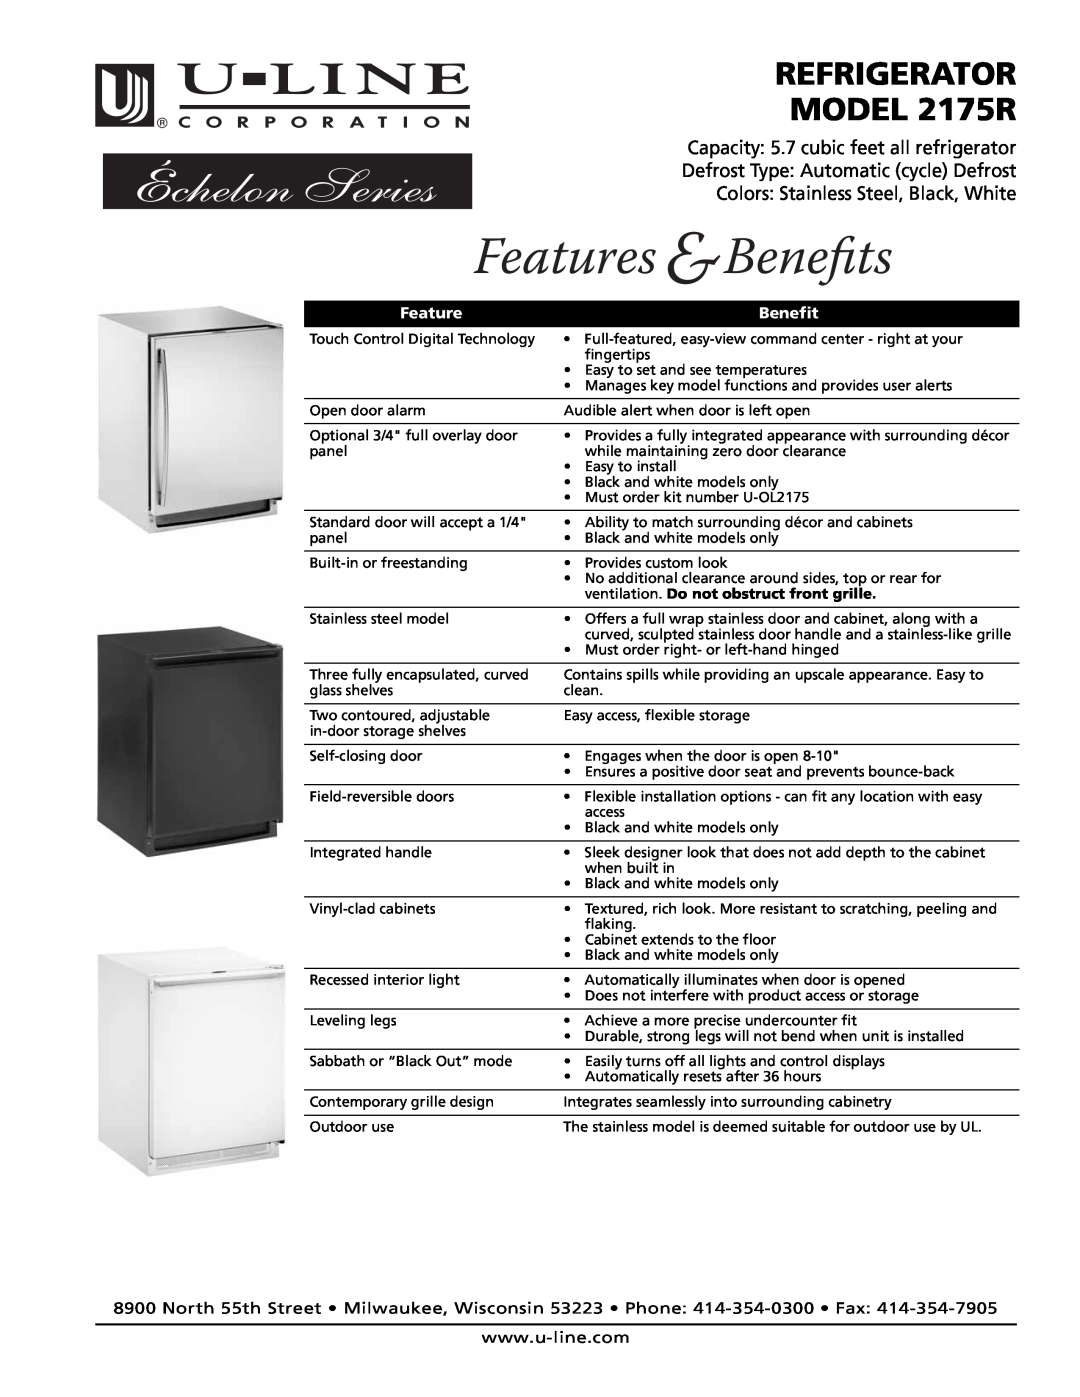 U-Line manual Beneﬁts, Features, REFRIGERATOR MODEL 2175R, Capacity 5.7 cubic feet all refrigerator, Benefit 